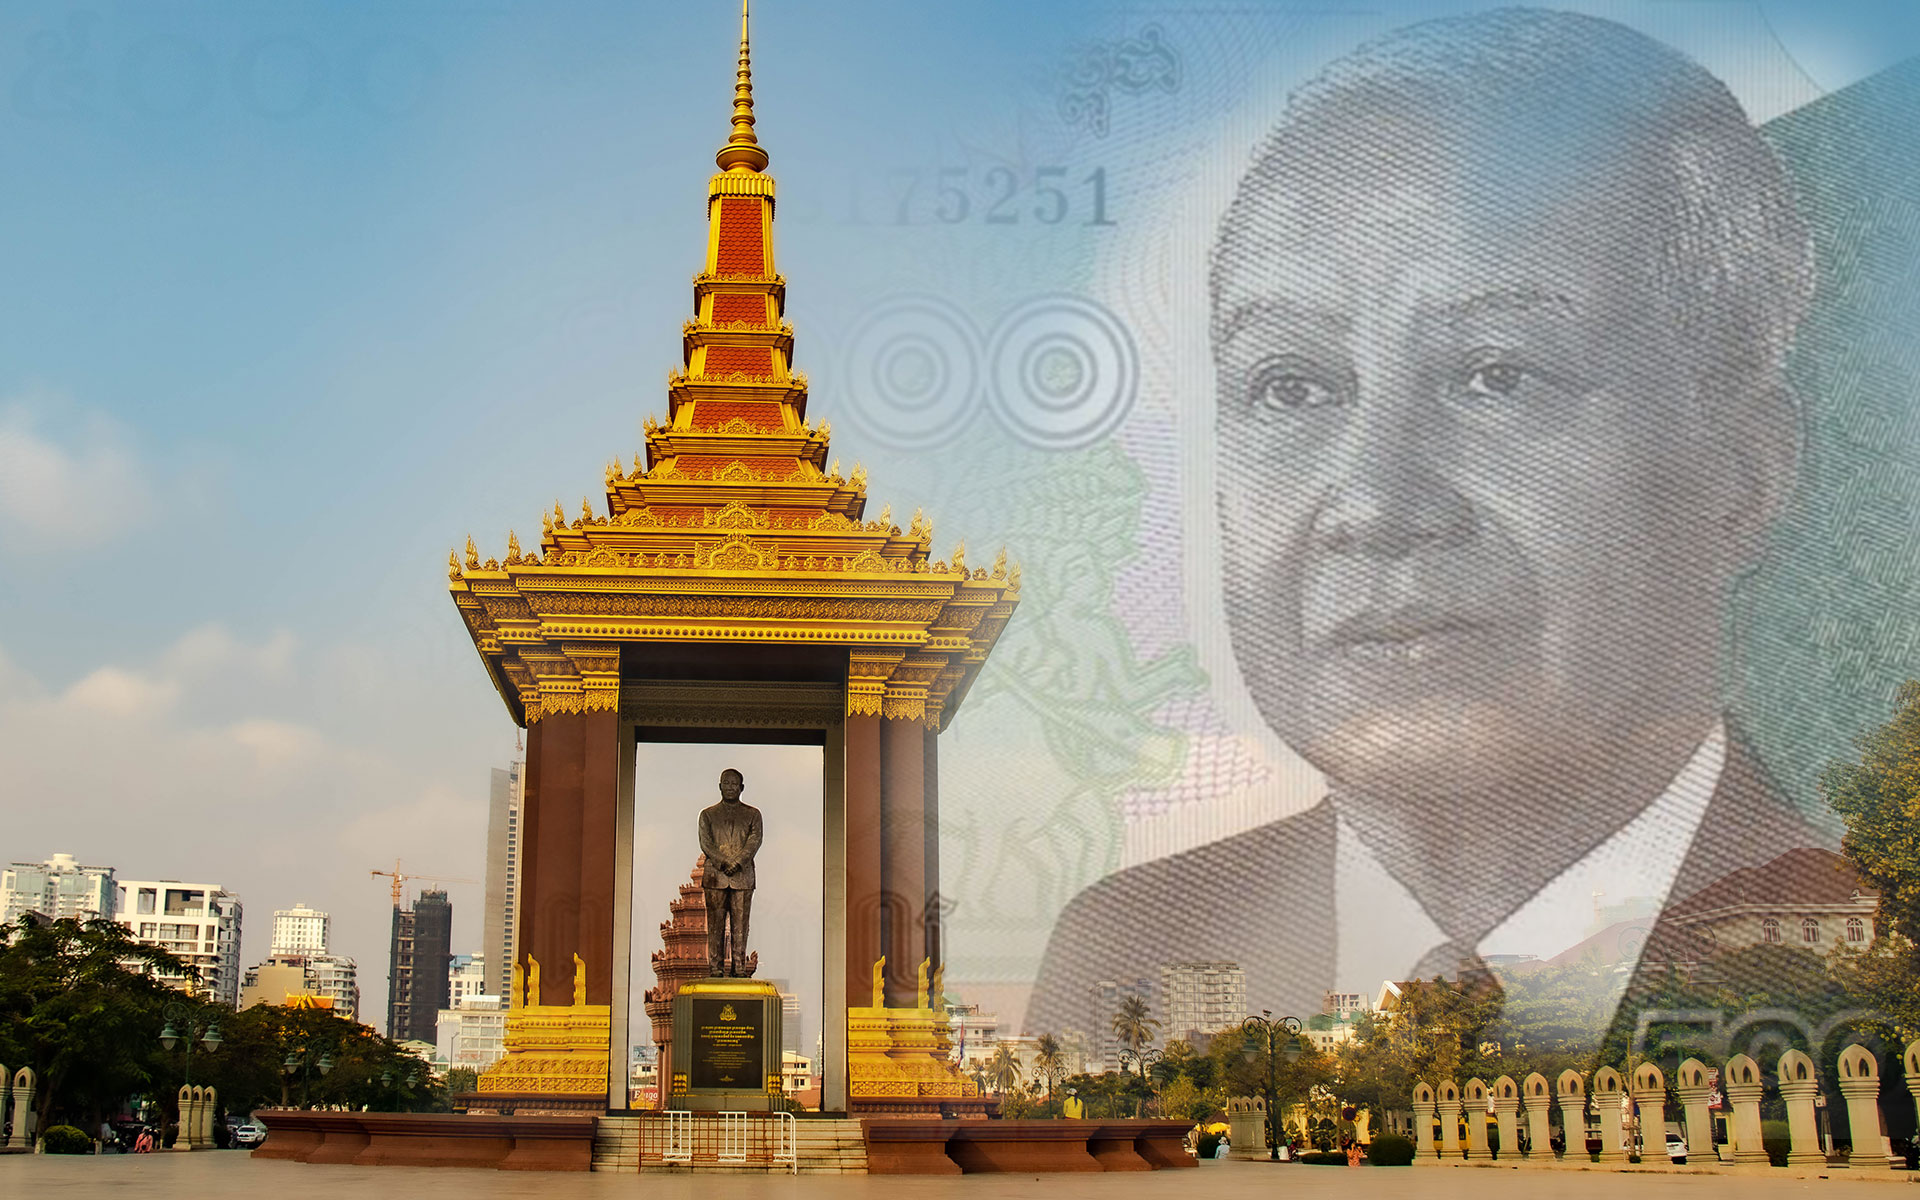 Late King Norodom Sihanouk